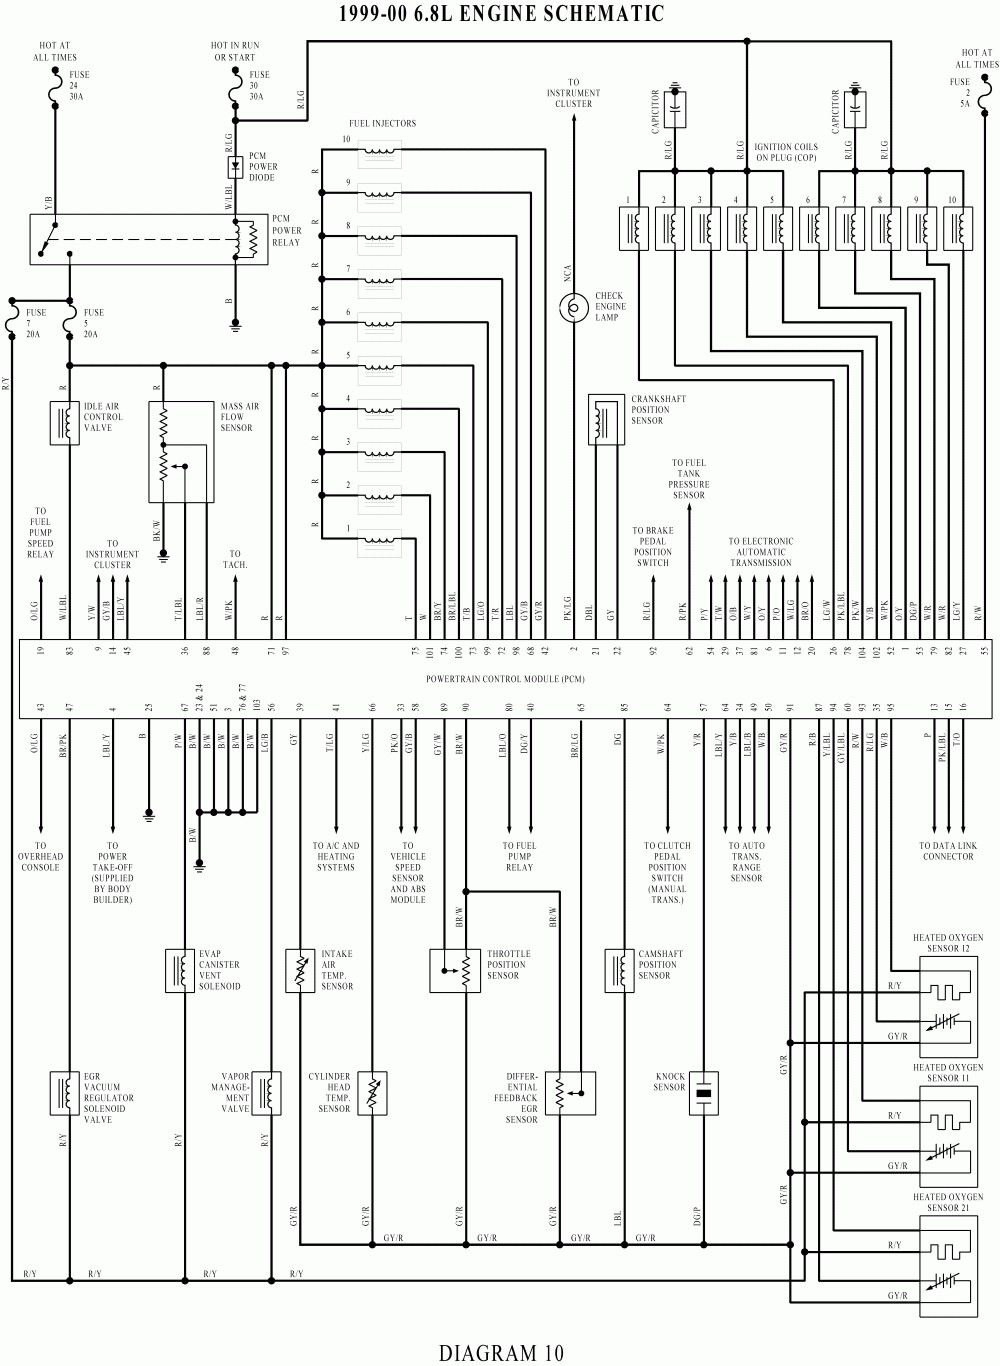 2000 ford F250 Ignition Wiring Diagram Wiring Diagram 2000 ford F250 Super Duty Of 2000 ford F250 Ignition Wiring Diagram